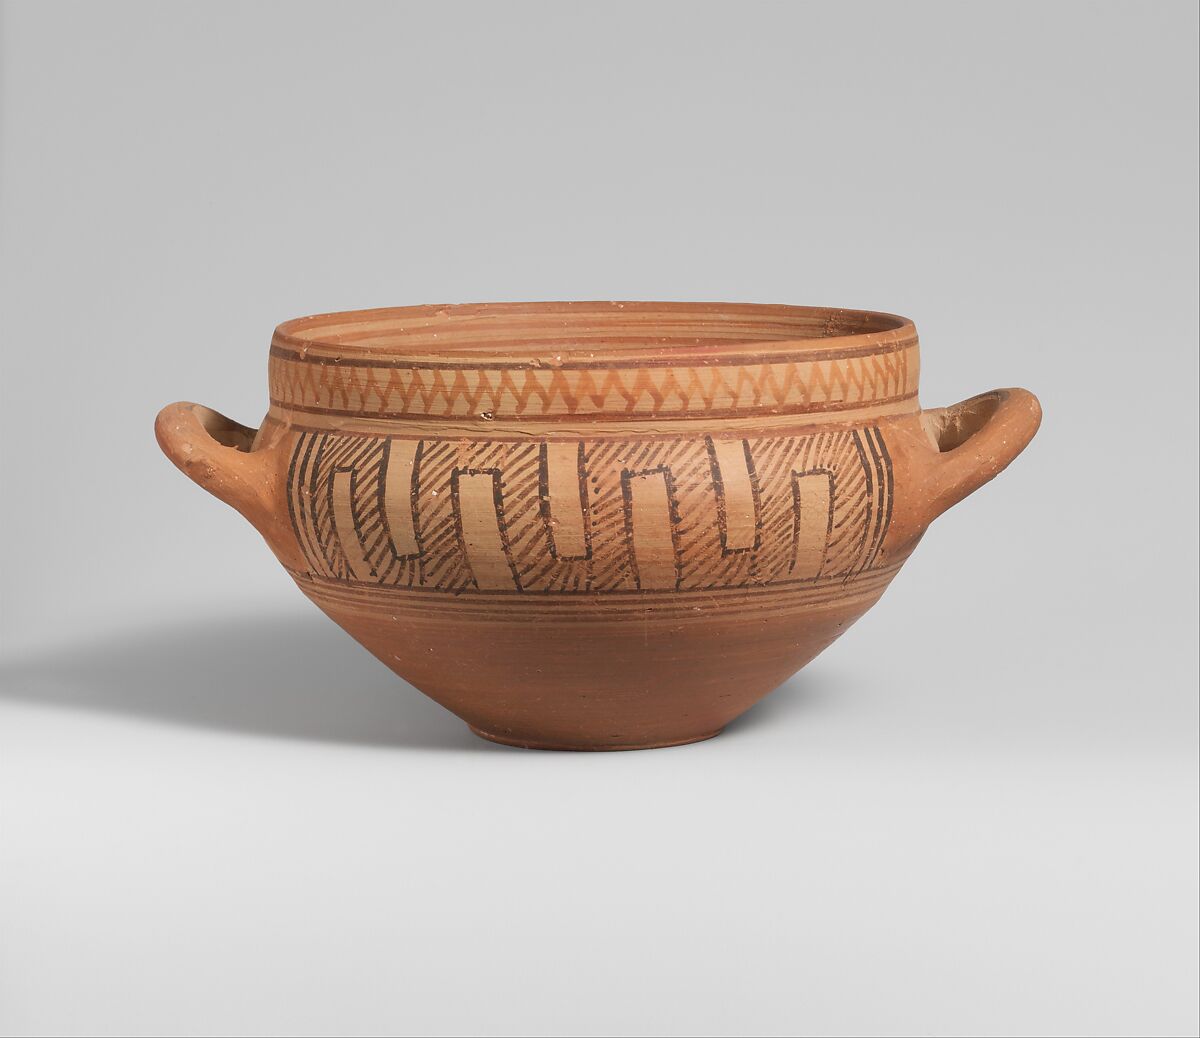 Terracotta skyphos (deep drinking cup), Terracotta, Cypriot 